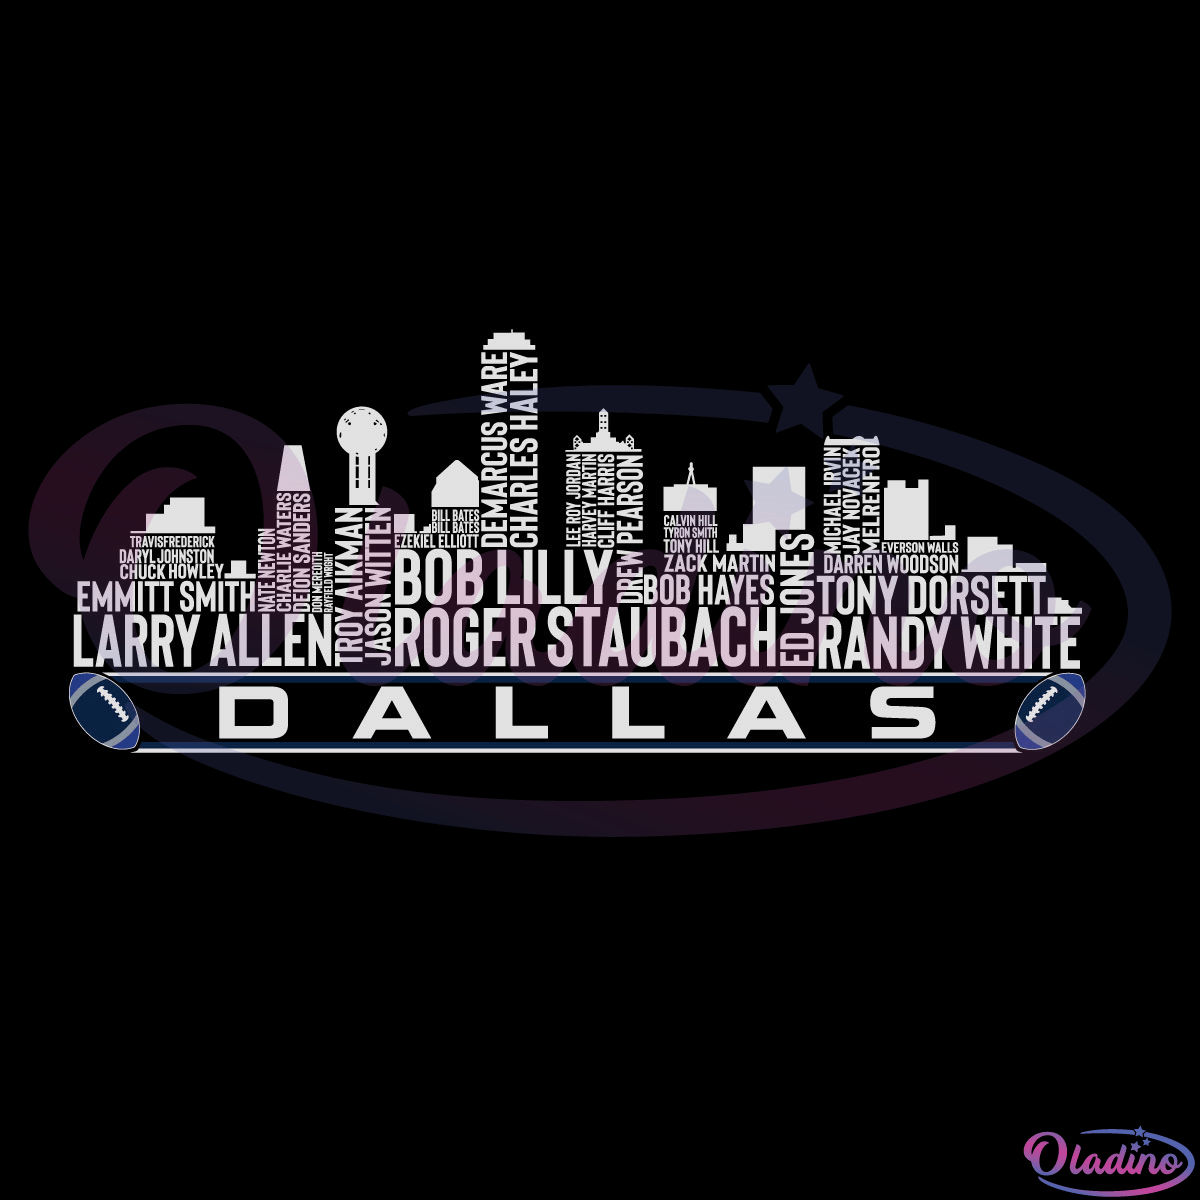 Dallas Football Team All Time Legend Digital File